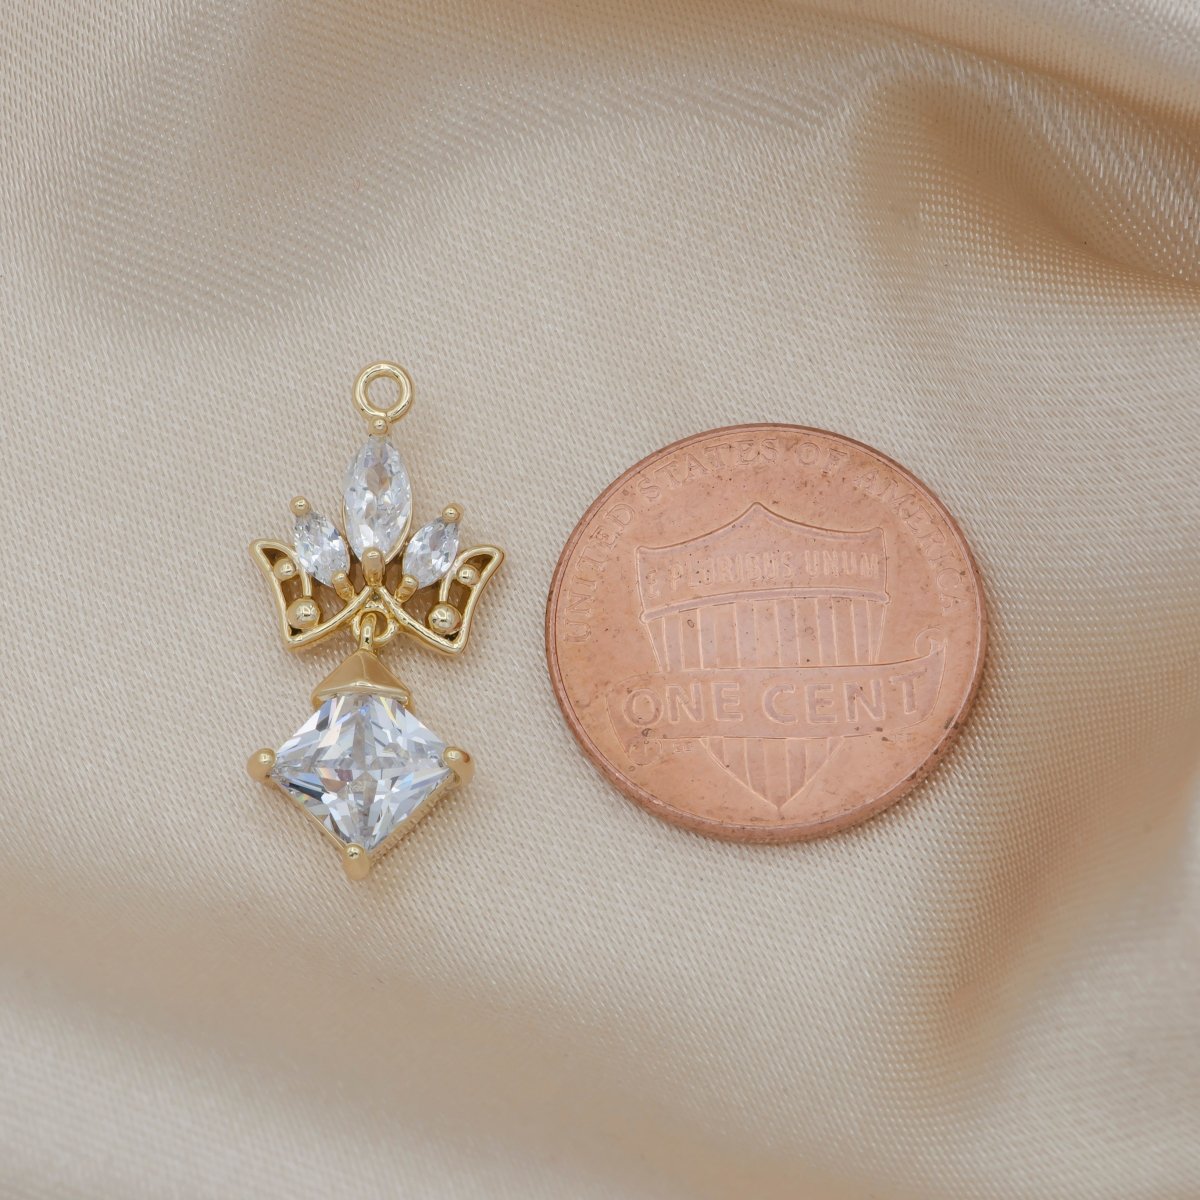 Tiny Diamond Crystal Crown Charm CZ Dainty Majesty Crown King Queen Prince Micro Pave Charm Pendant GP-510 - DLUXCA